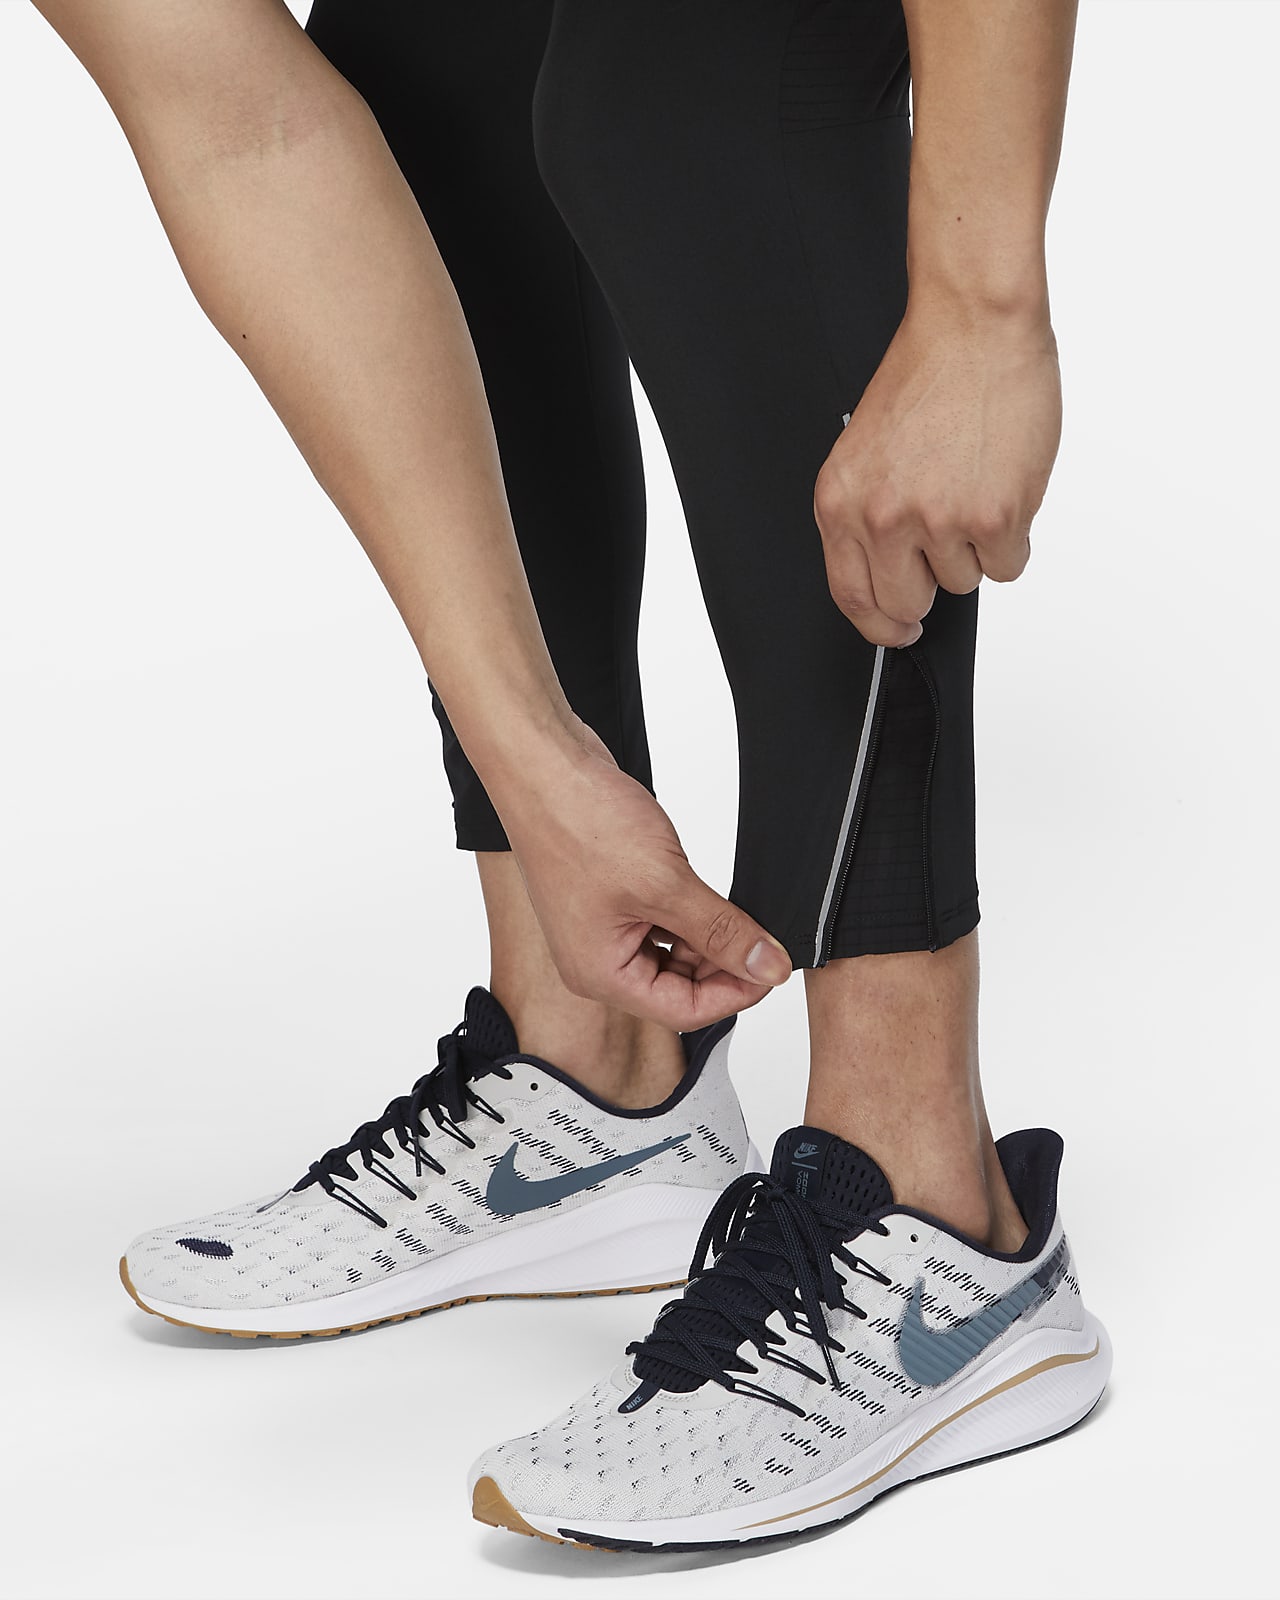 Nike Dri-FIT Phenom Elite Men's Woven Running Pants